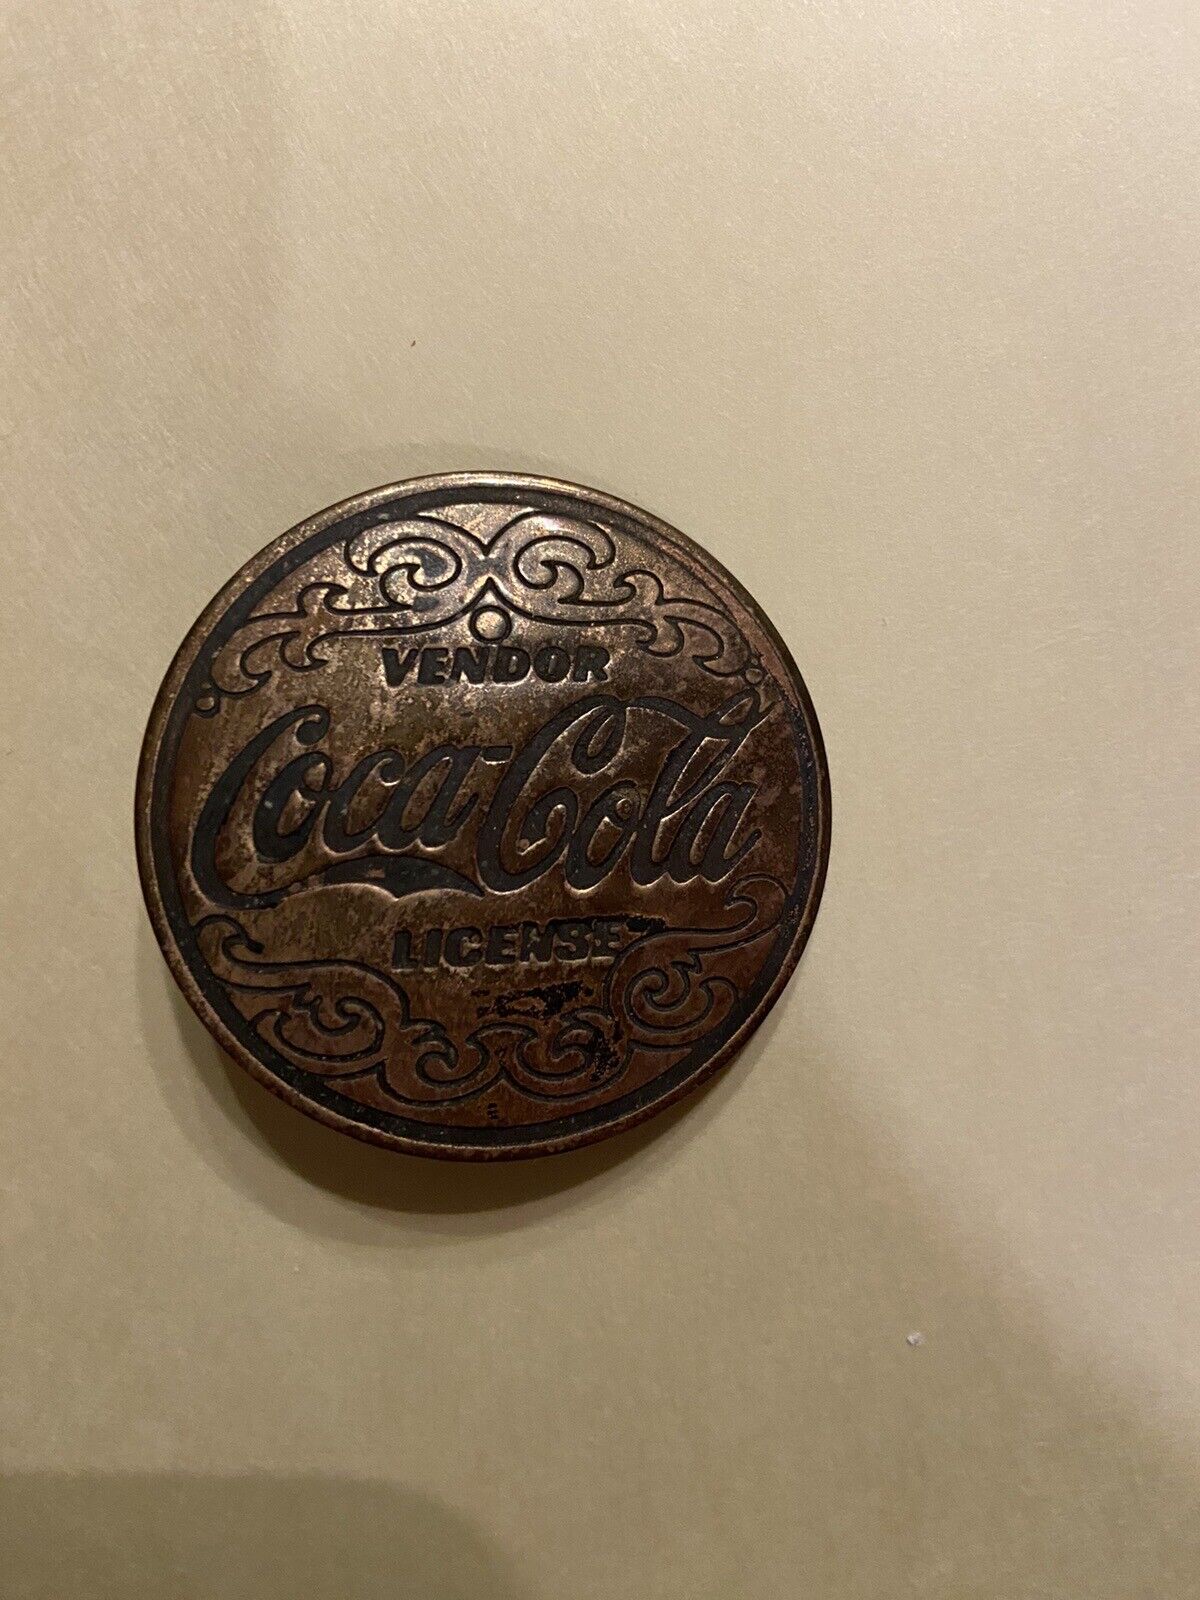 Vintage Badge: “vendor Coca Cola License” Round With A Design Surface